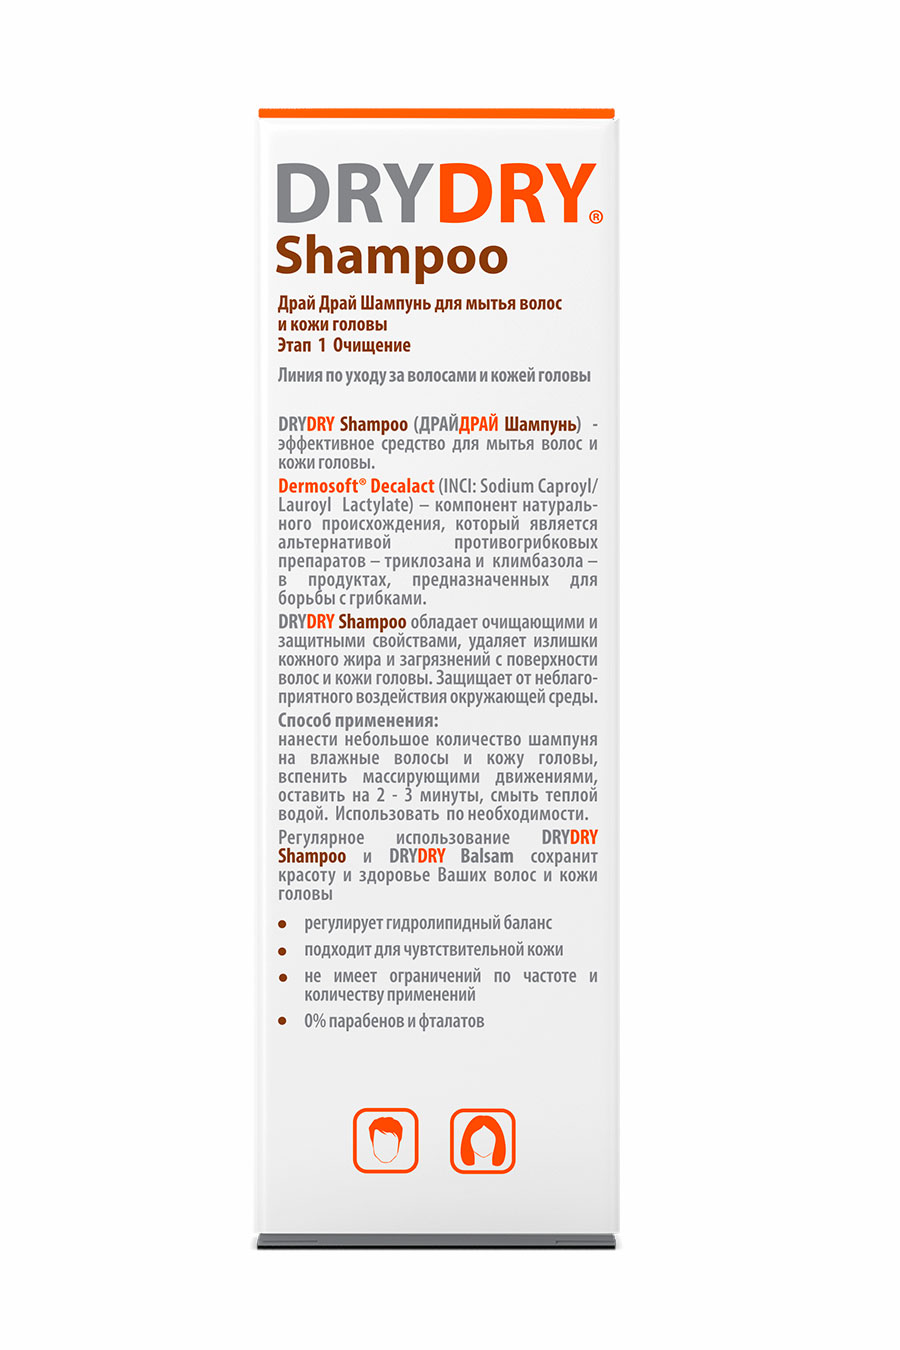 Dry dry shampoo отзывы. Драй драй шампунь. Asda Dry Shampoo. Dry Dry шампунь отзывы.